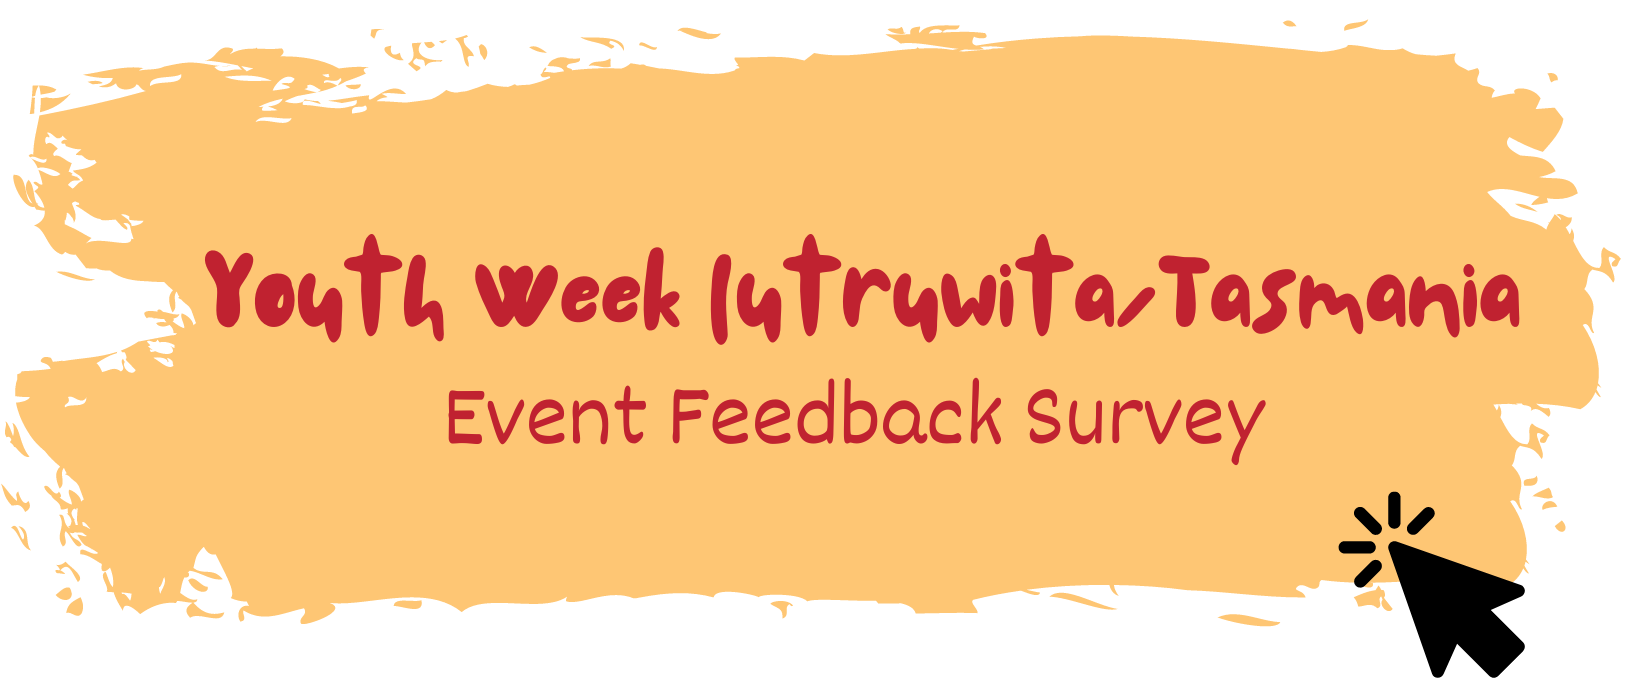 Banner saying "Youth Week lutruwita/Tasmania Event Feedback Survey